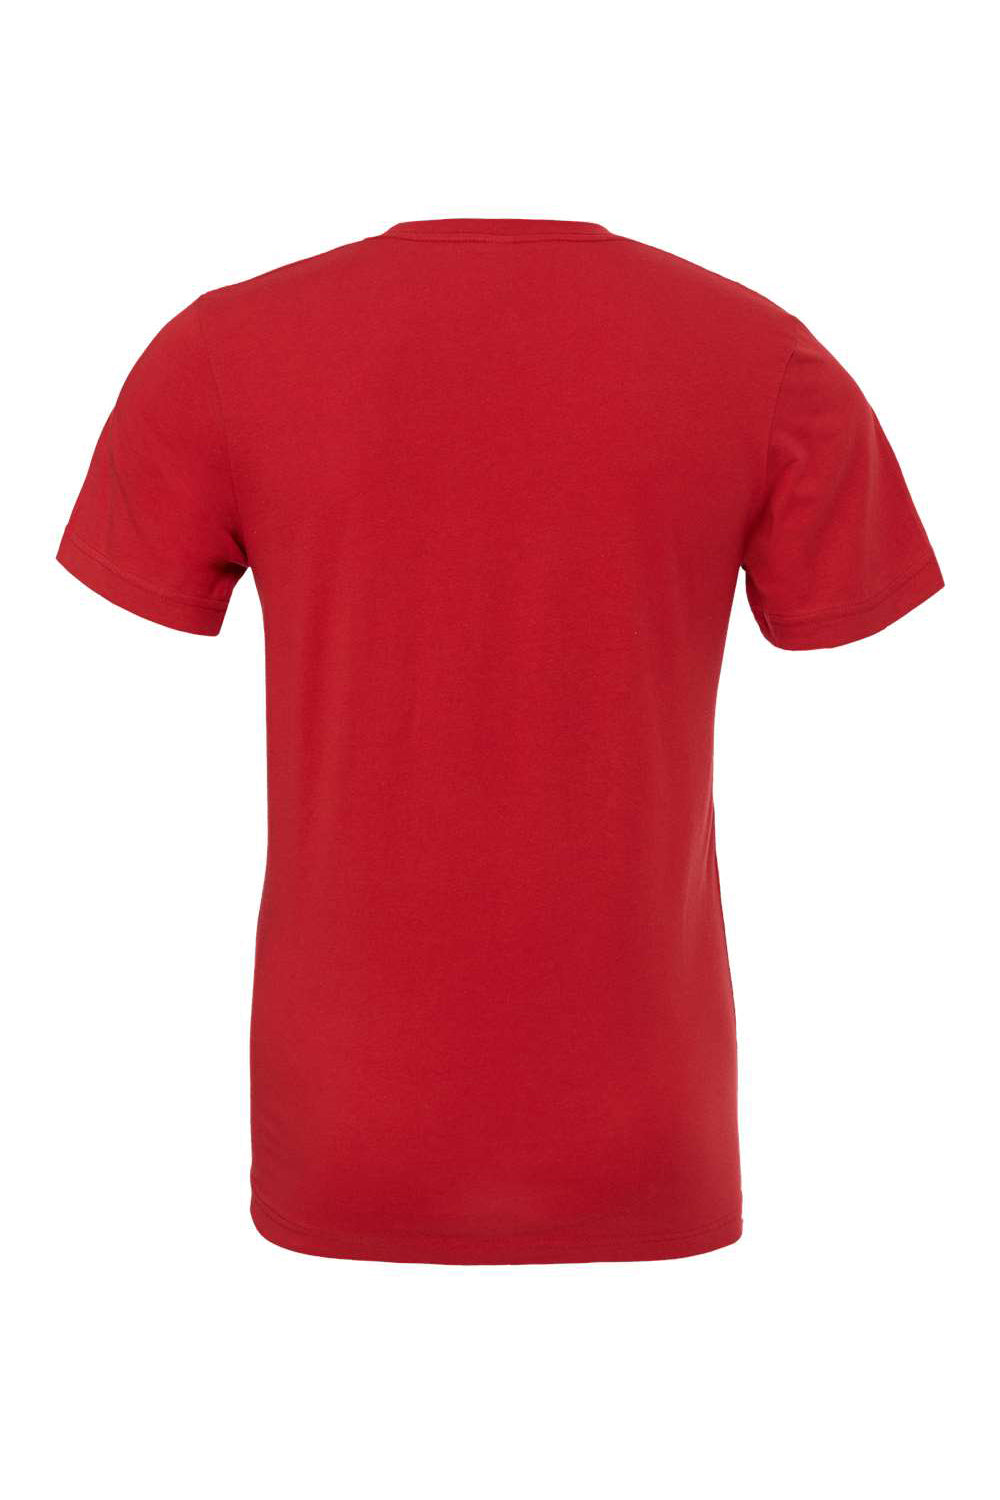 Bella + Canvas BC3001/3001C Mens Jersey Short Sleeve Crewneck T-Shirt Canvas Red Flat Back